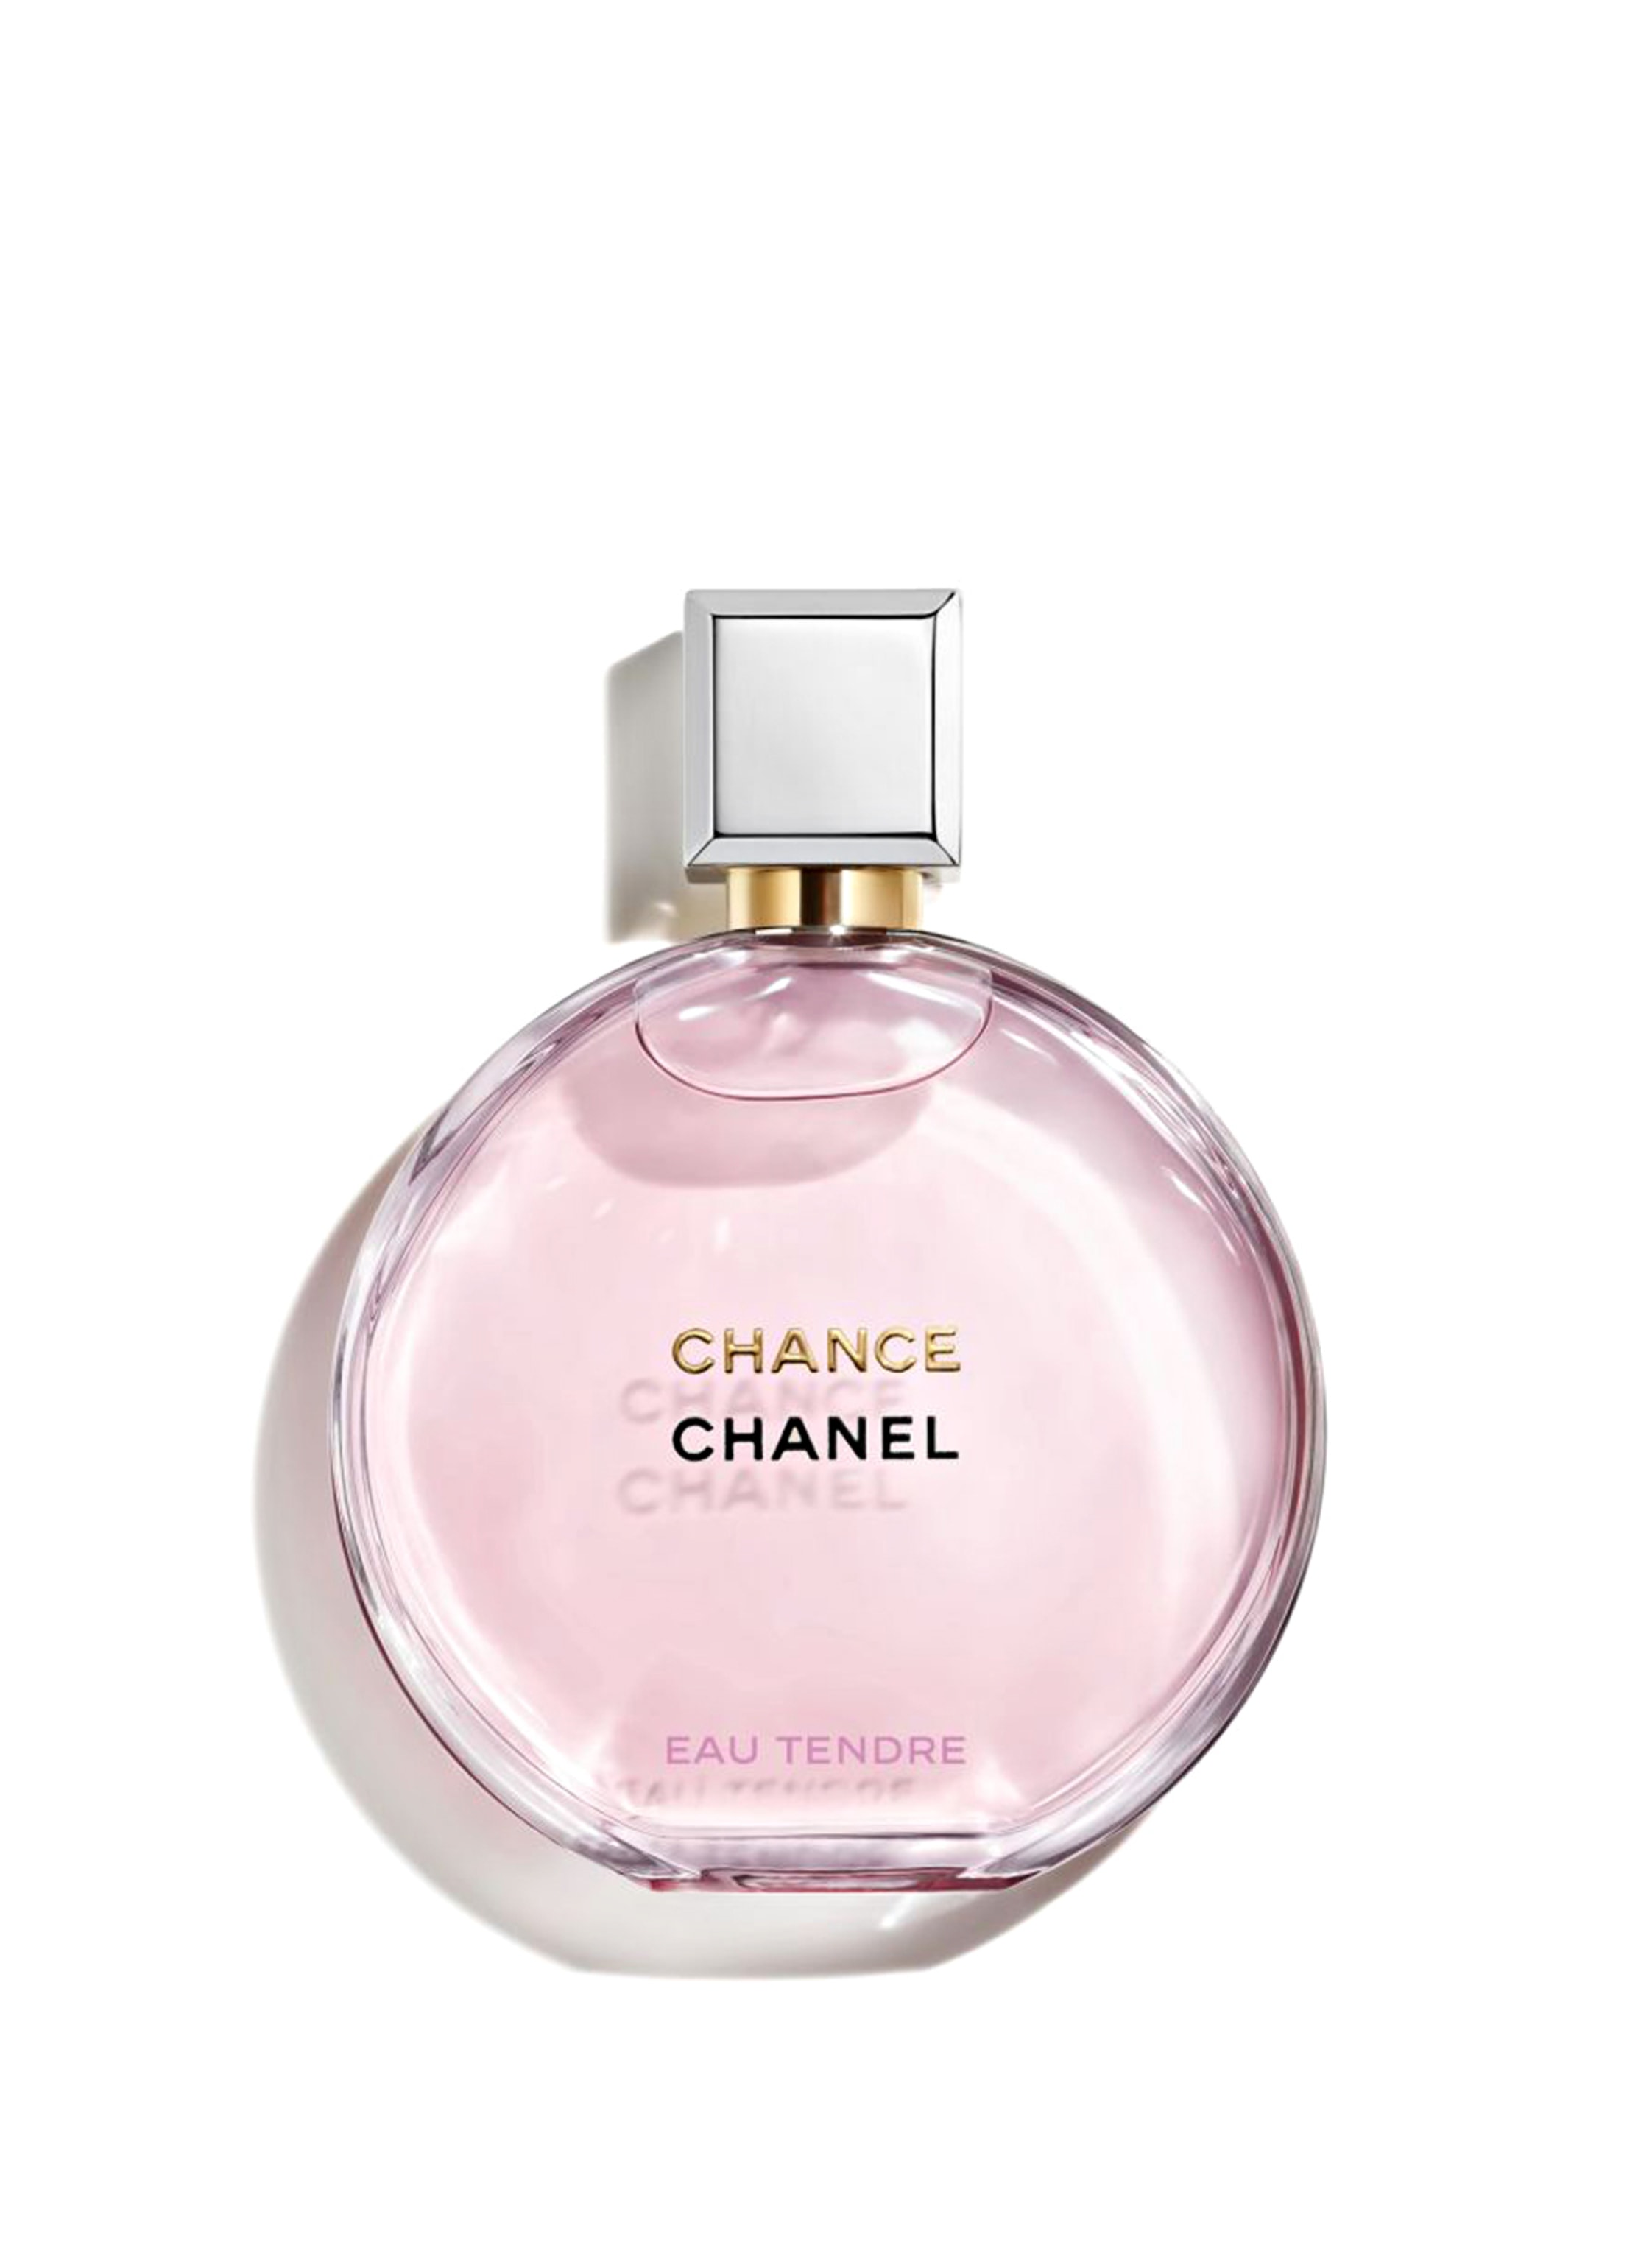 Chanel Chance eau tendre eau de toilette perfume decant in 3ml 5ml